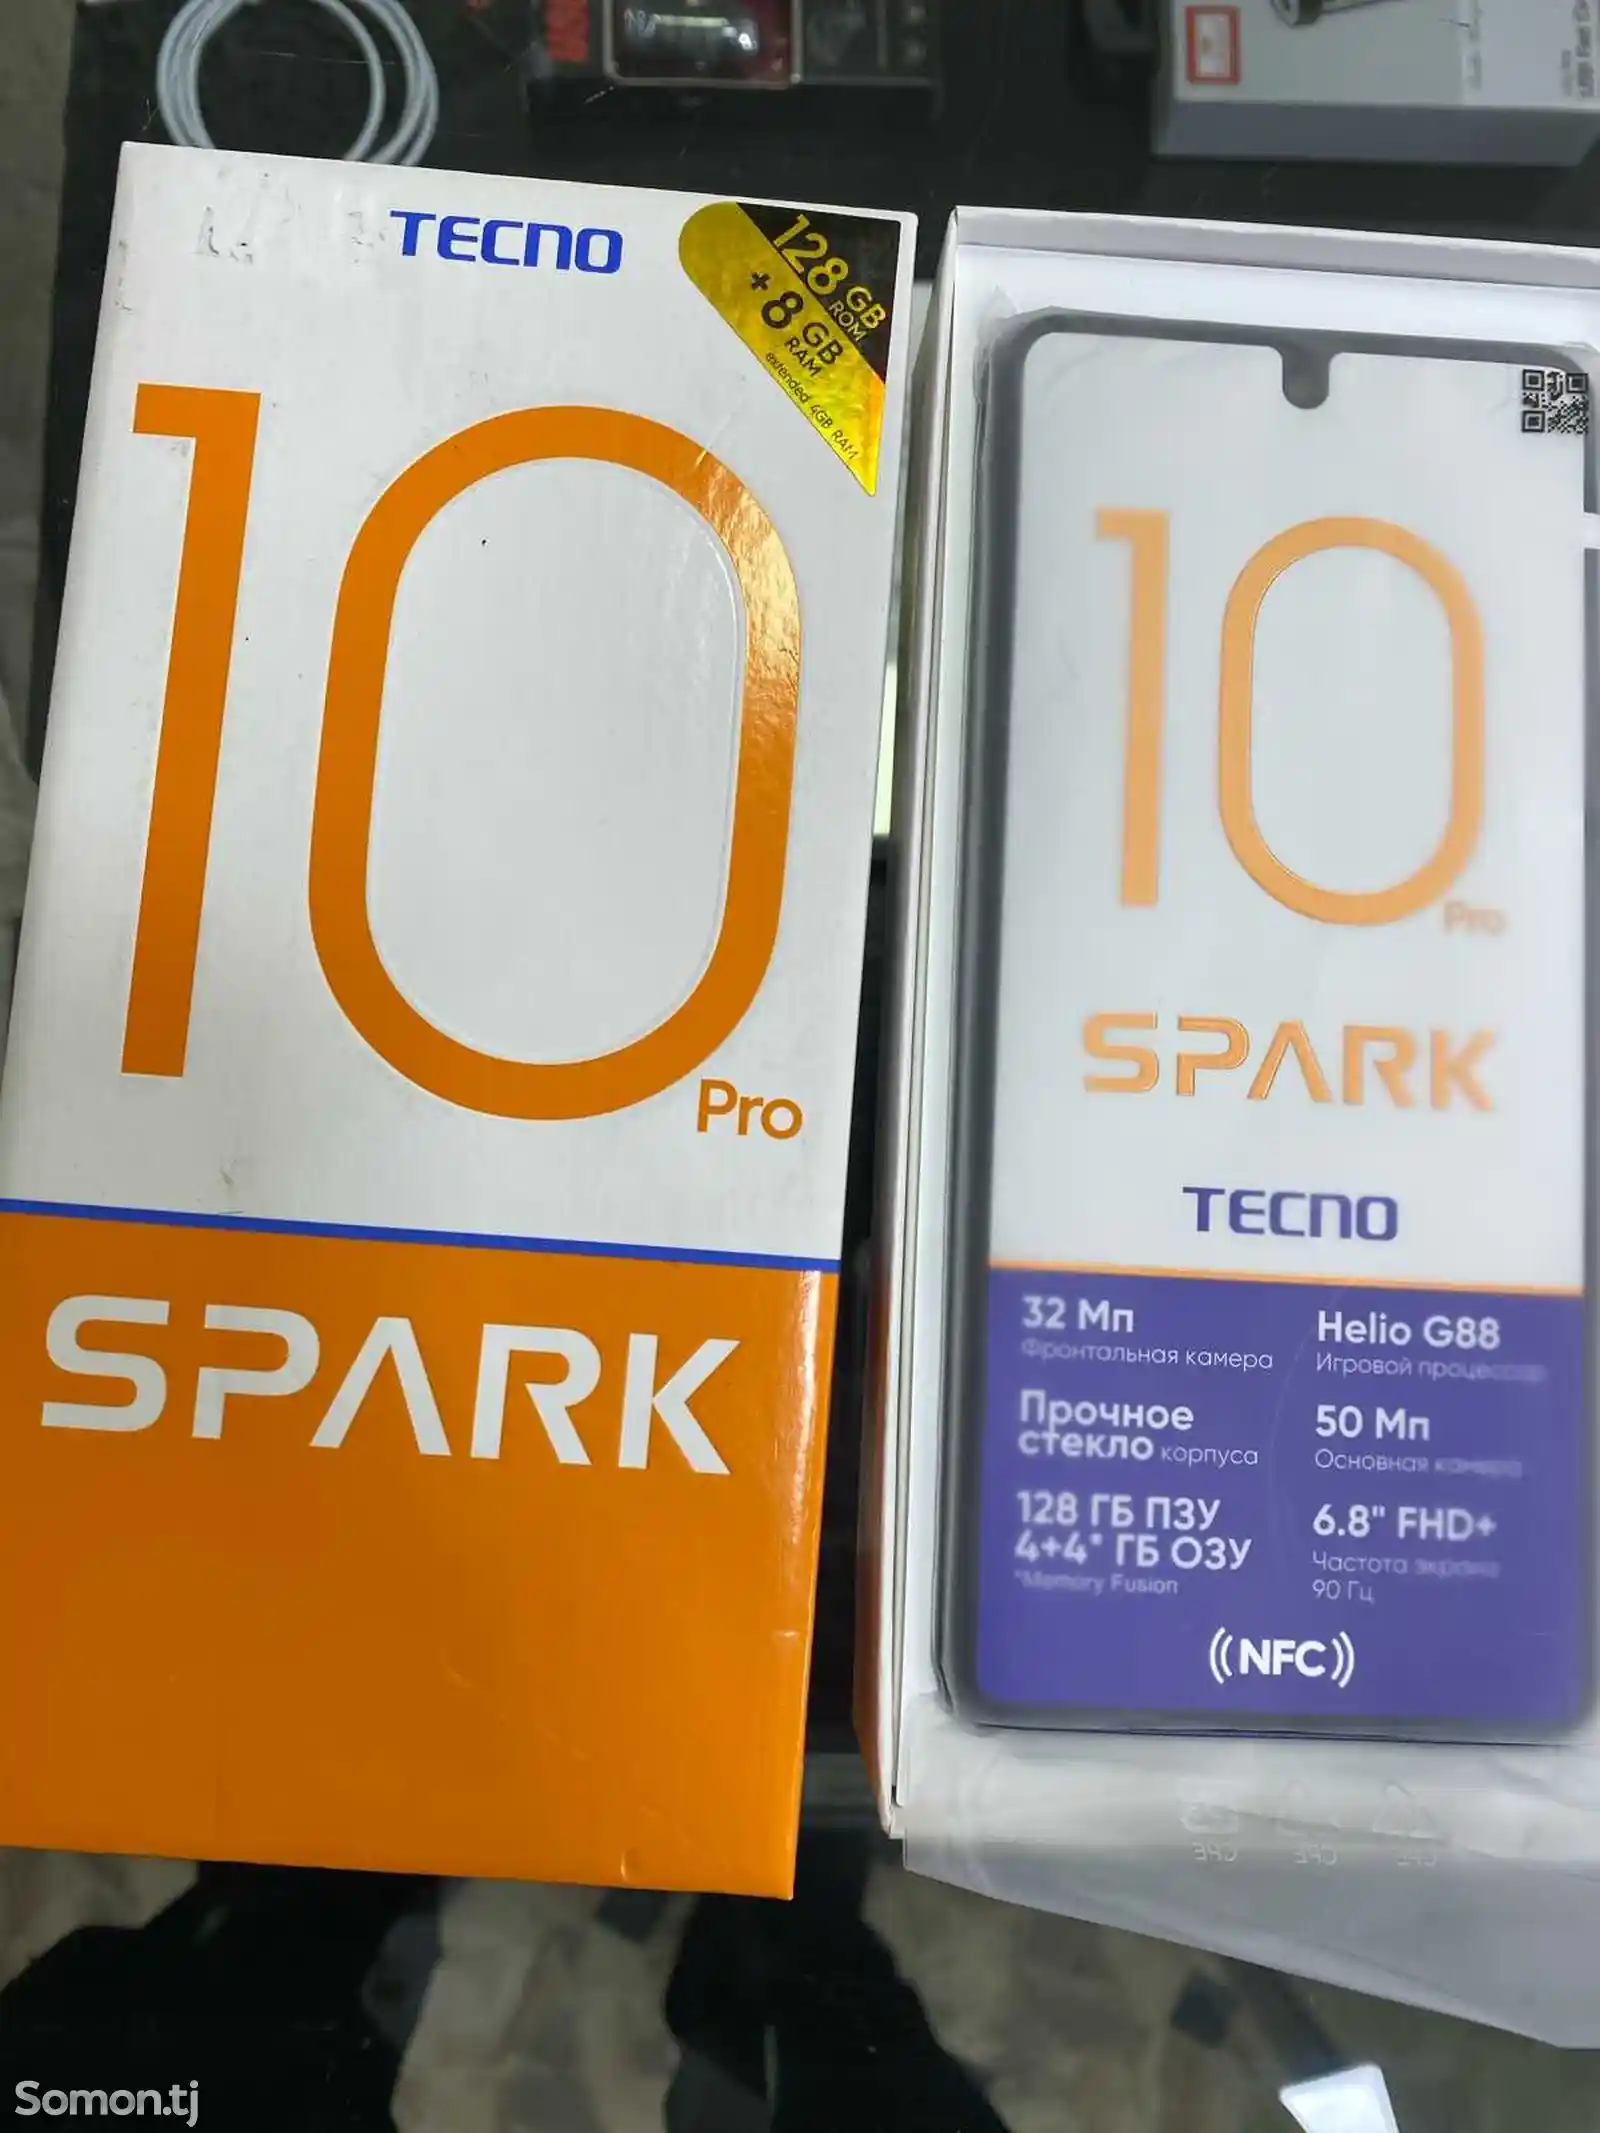 Tecno Spark 10 Pro